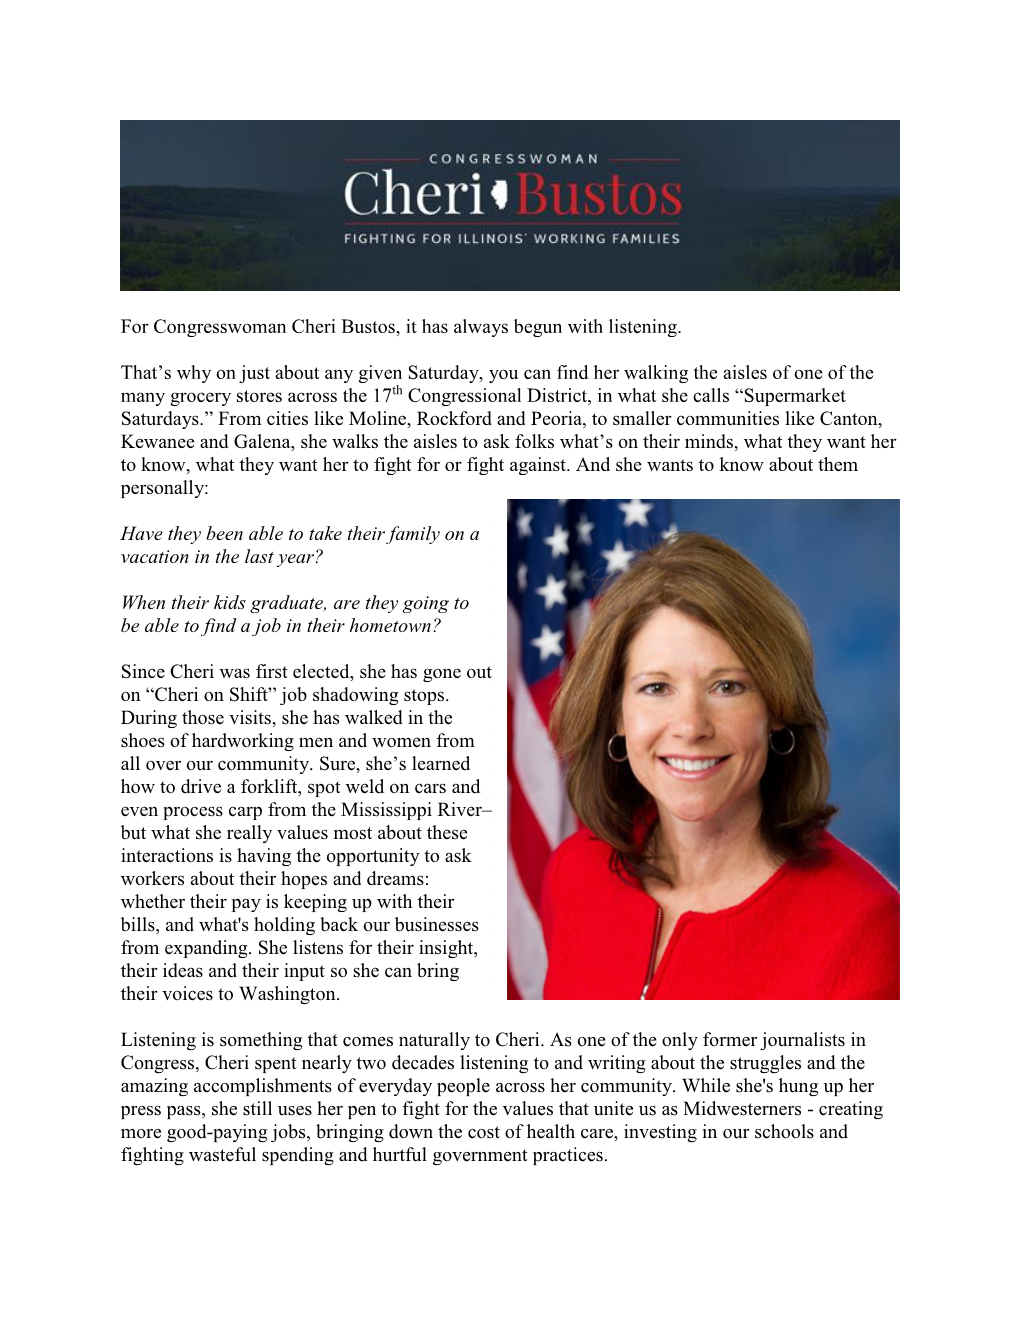 For Congresswoman Cheri Bustos, It Has Always Begun with Listening